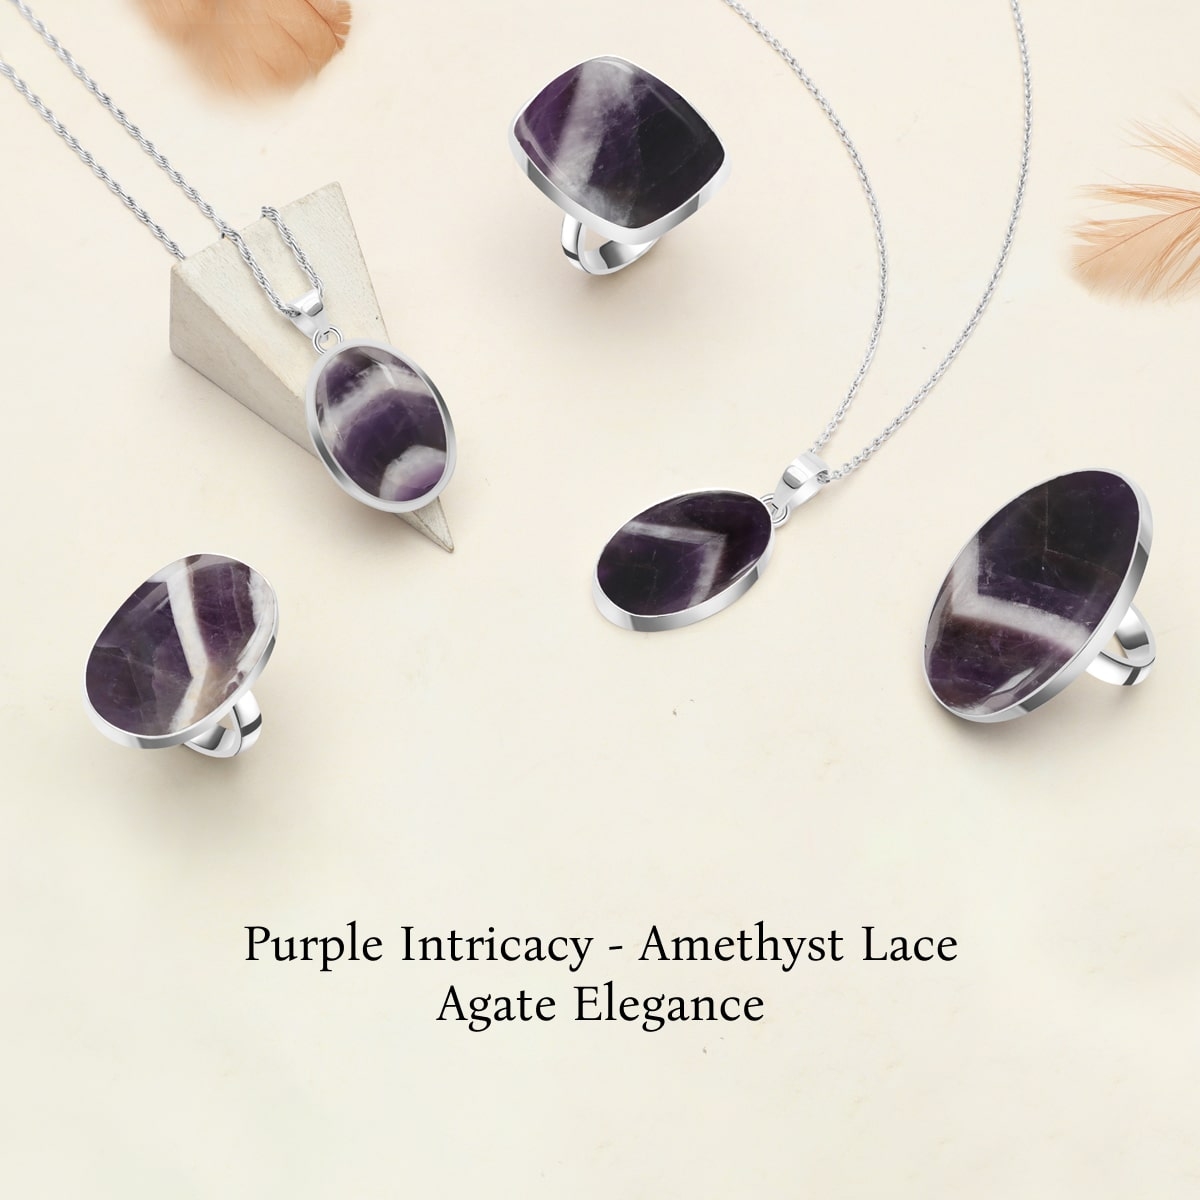 Amethyst Lace Agate: Where Delicate Patterns Meet Purple Grace